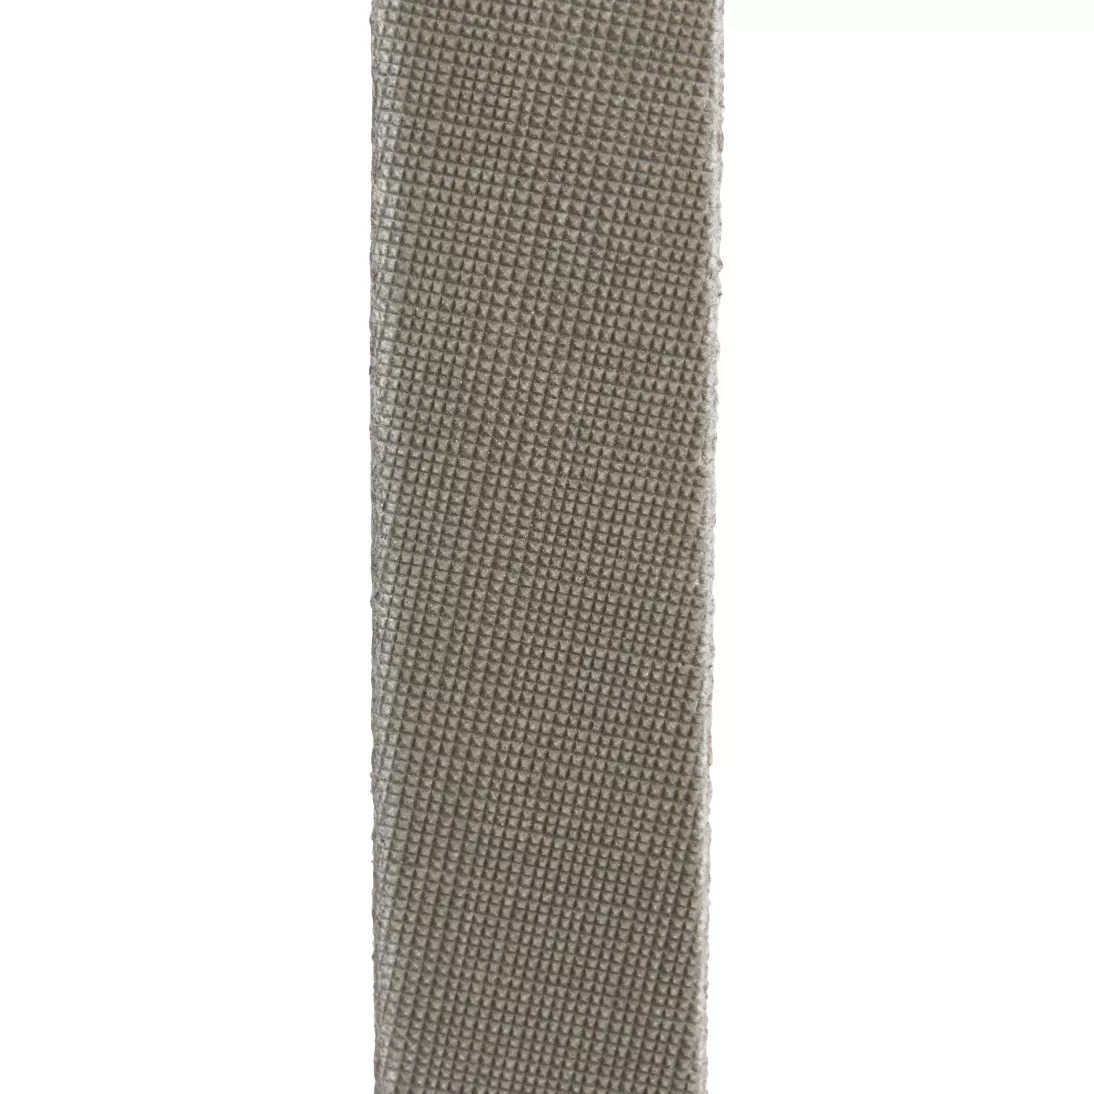 3M™ Trizact™ Cloth Roll 237AA, A65 X-weight, 16 in x 50 yd, ASO, Full-
flex